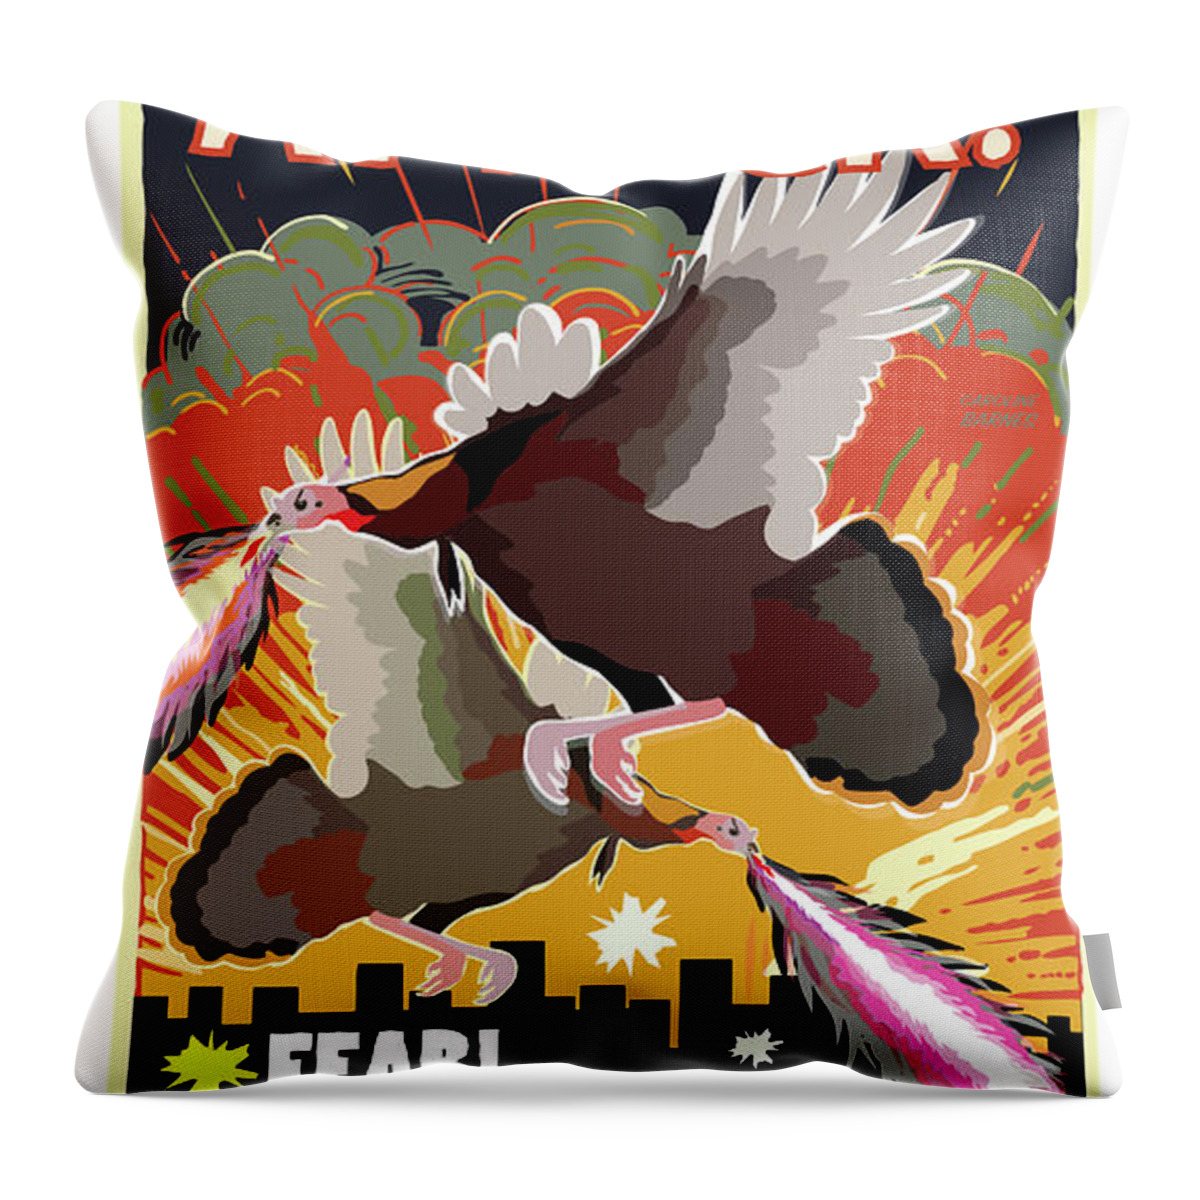 Brookline Turkeys Throw Pillow featuring the digital art Attack by Caroline Barnes